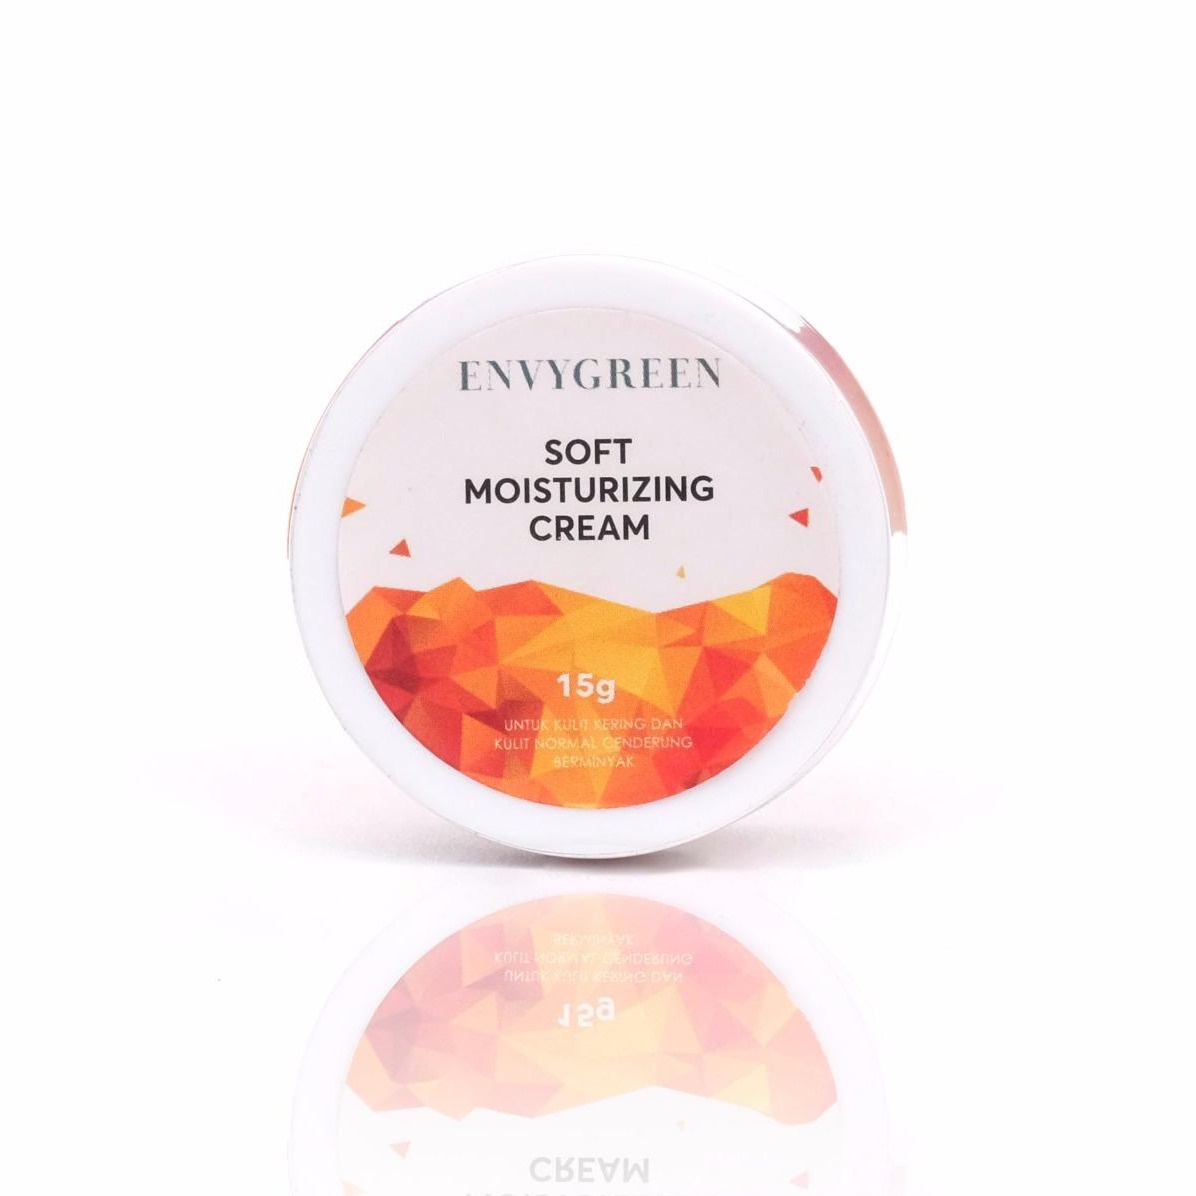 Envygreen Soft Moisturizing Cream